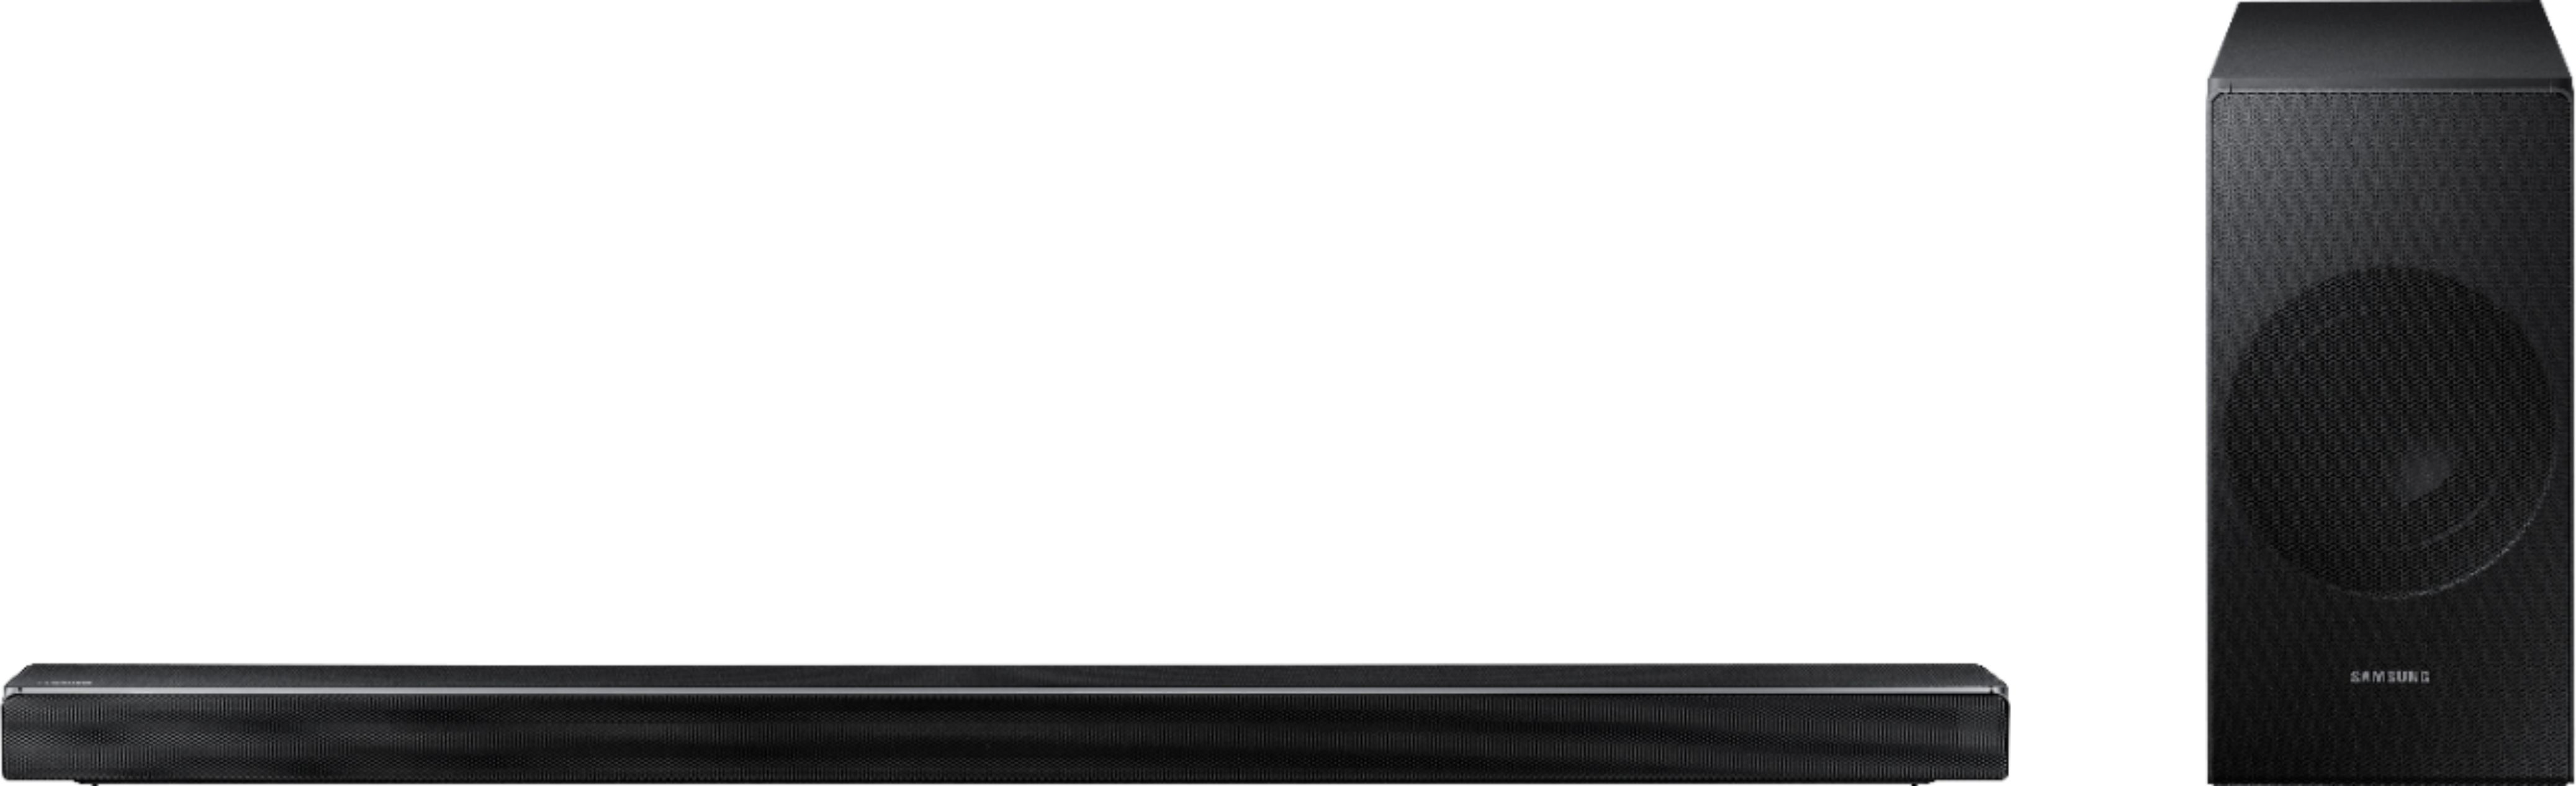 Best Buy: Soundbar System with Wireless Subwoofer Digital Amplifier Charcoal Black HW-N650/ZA